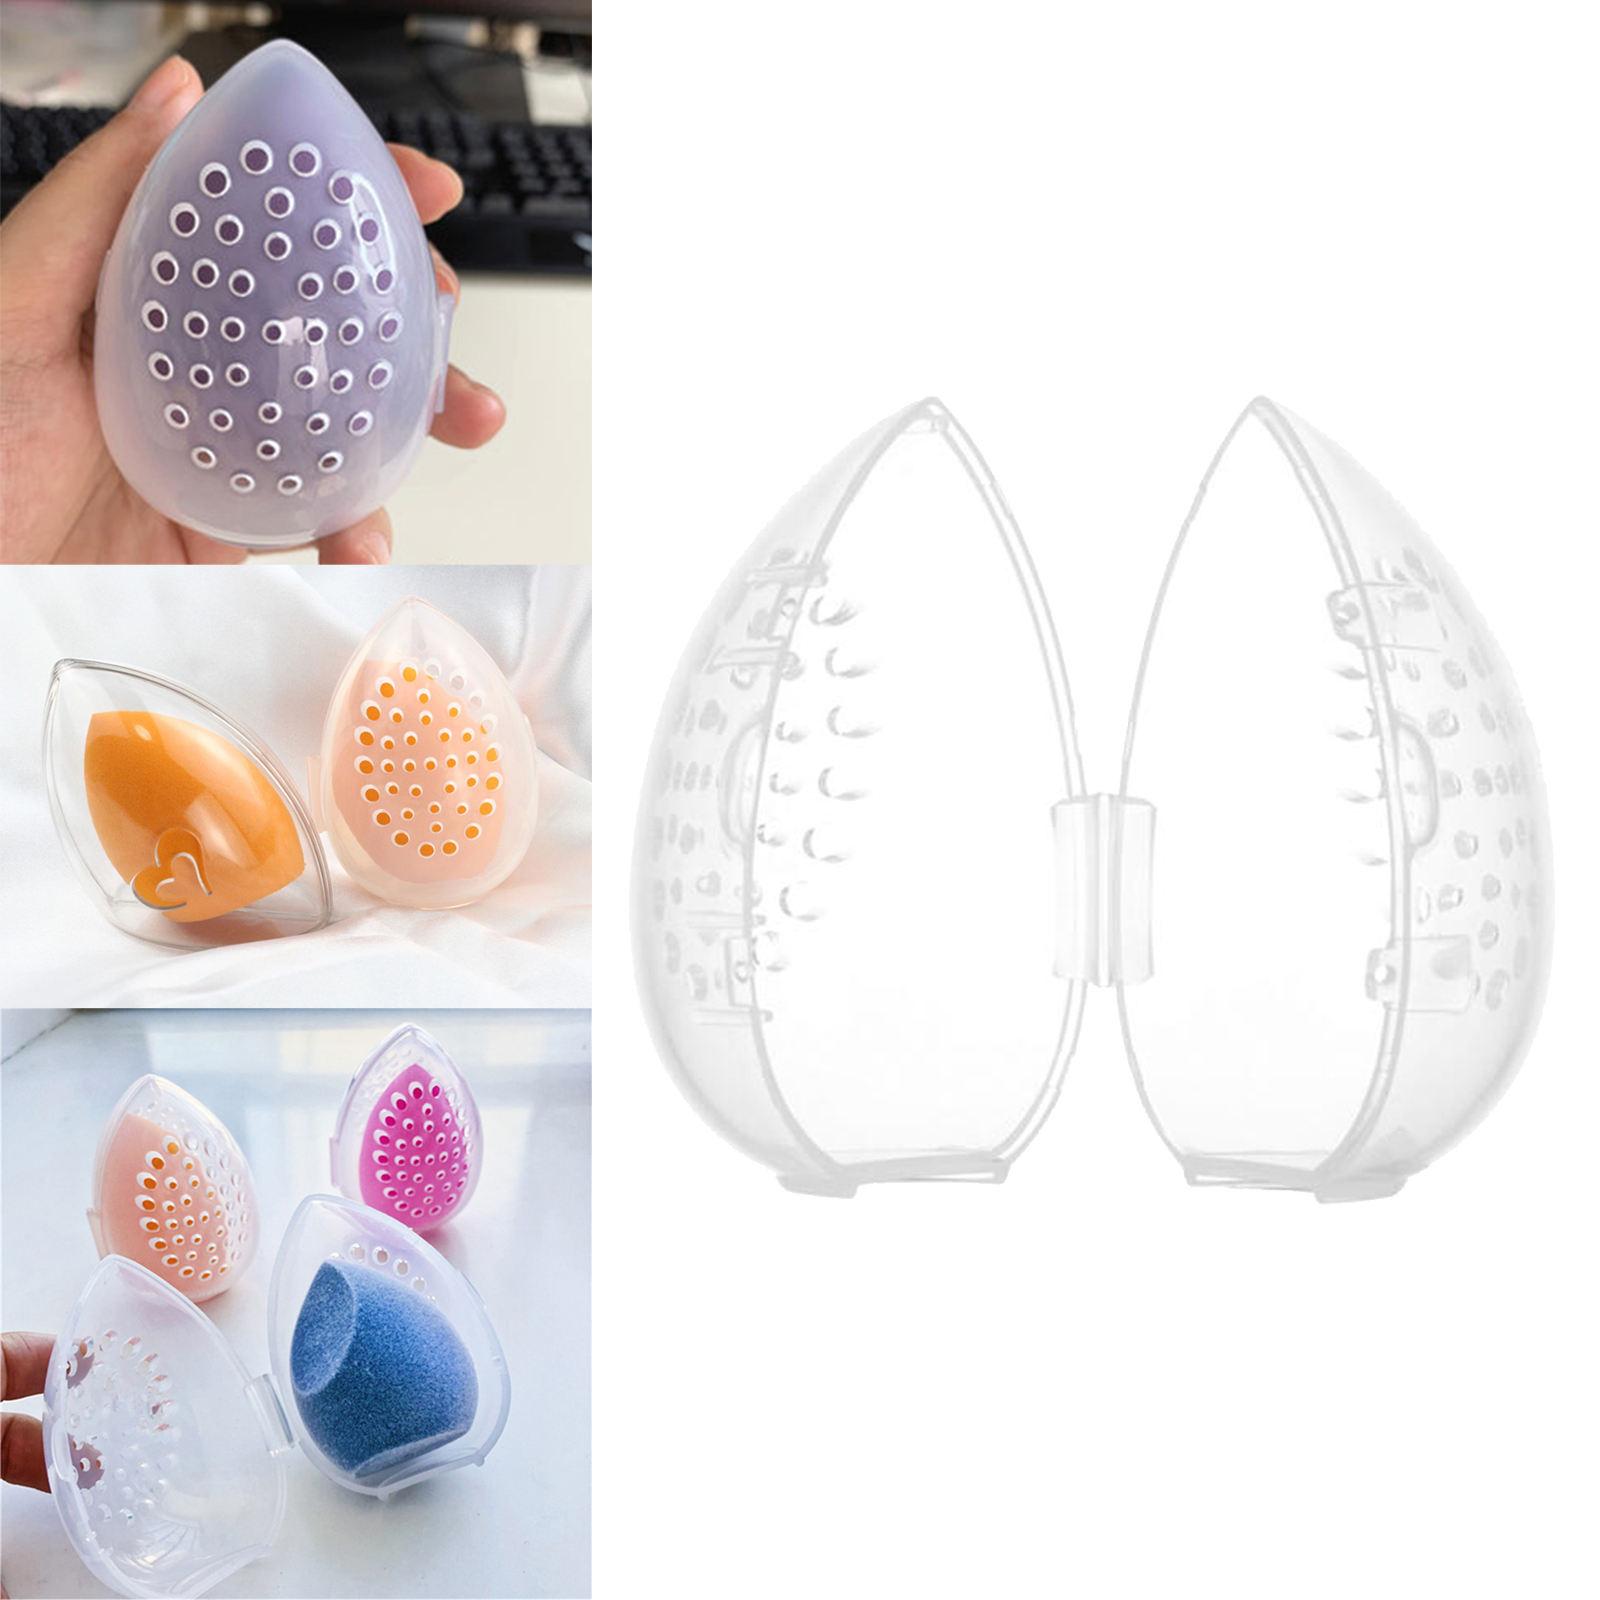 Beauty Egg Storage Box Organizer Cosmetic Holder Bracket for Travel Tool